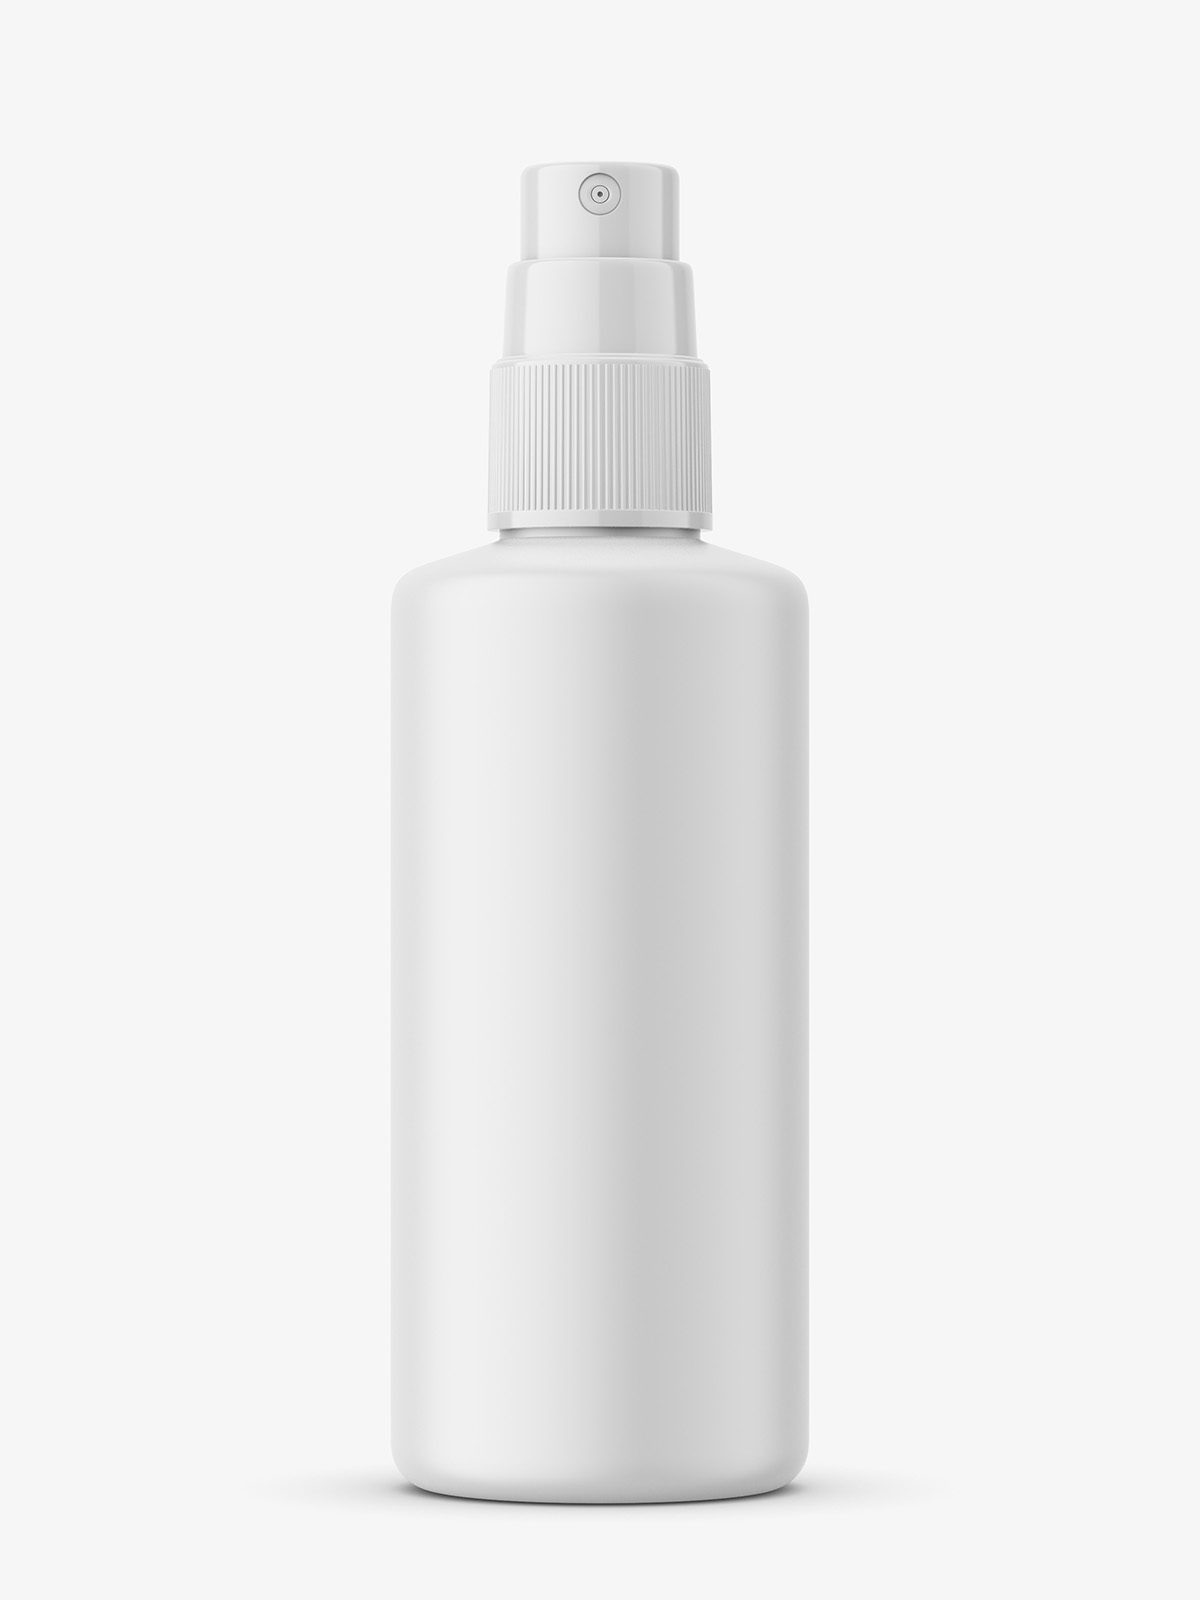 Mist spray bottle mockup / 100 ml - Smarty Mockups